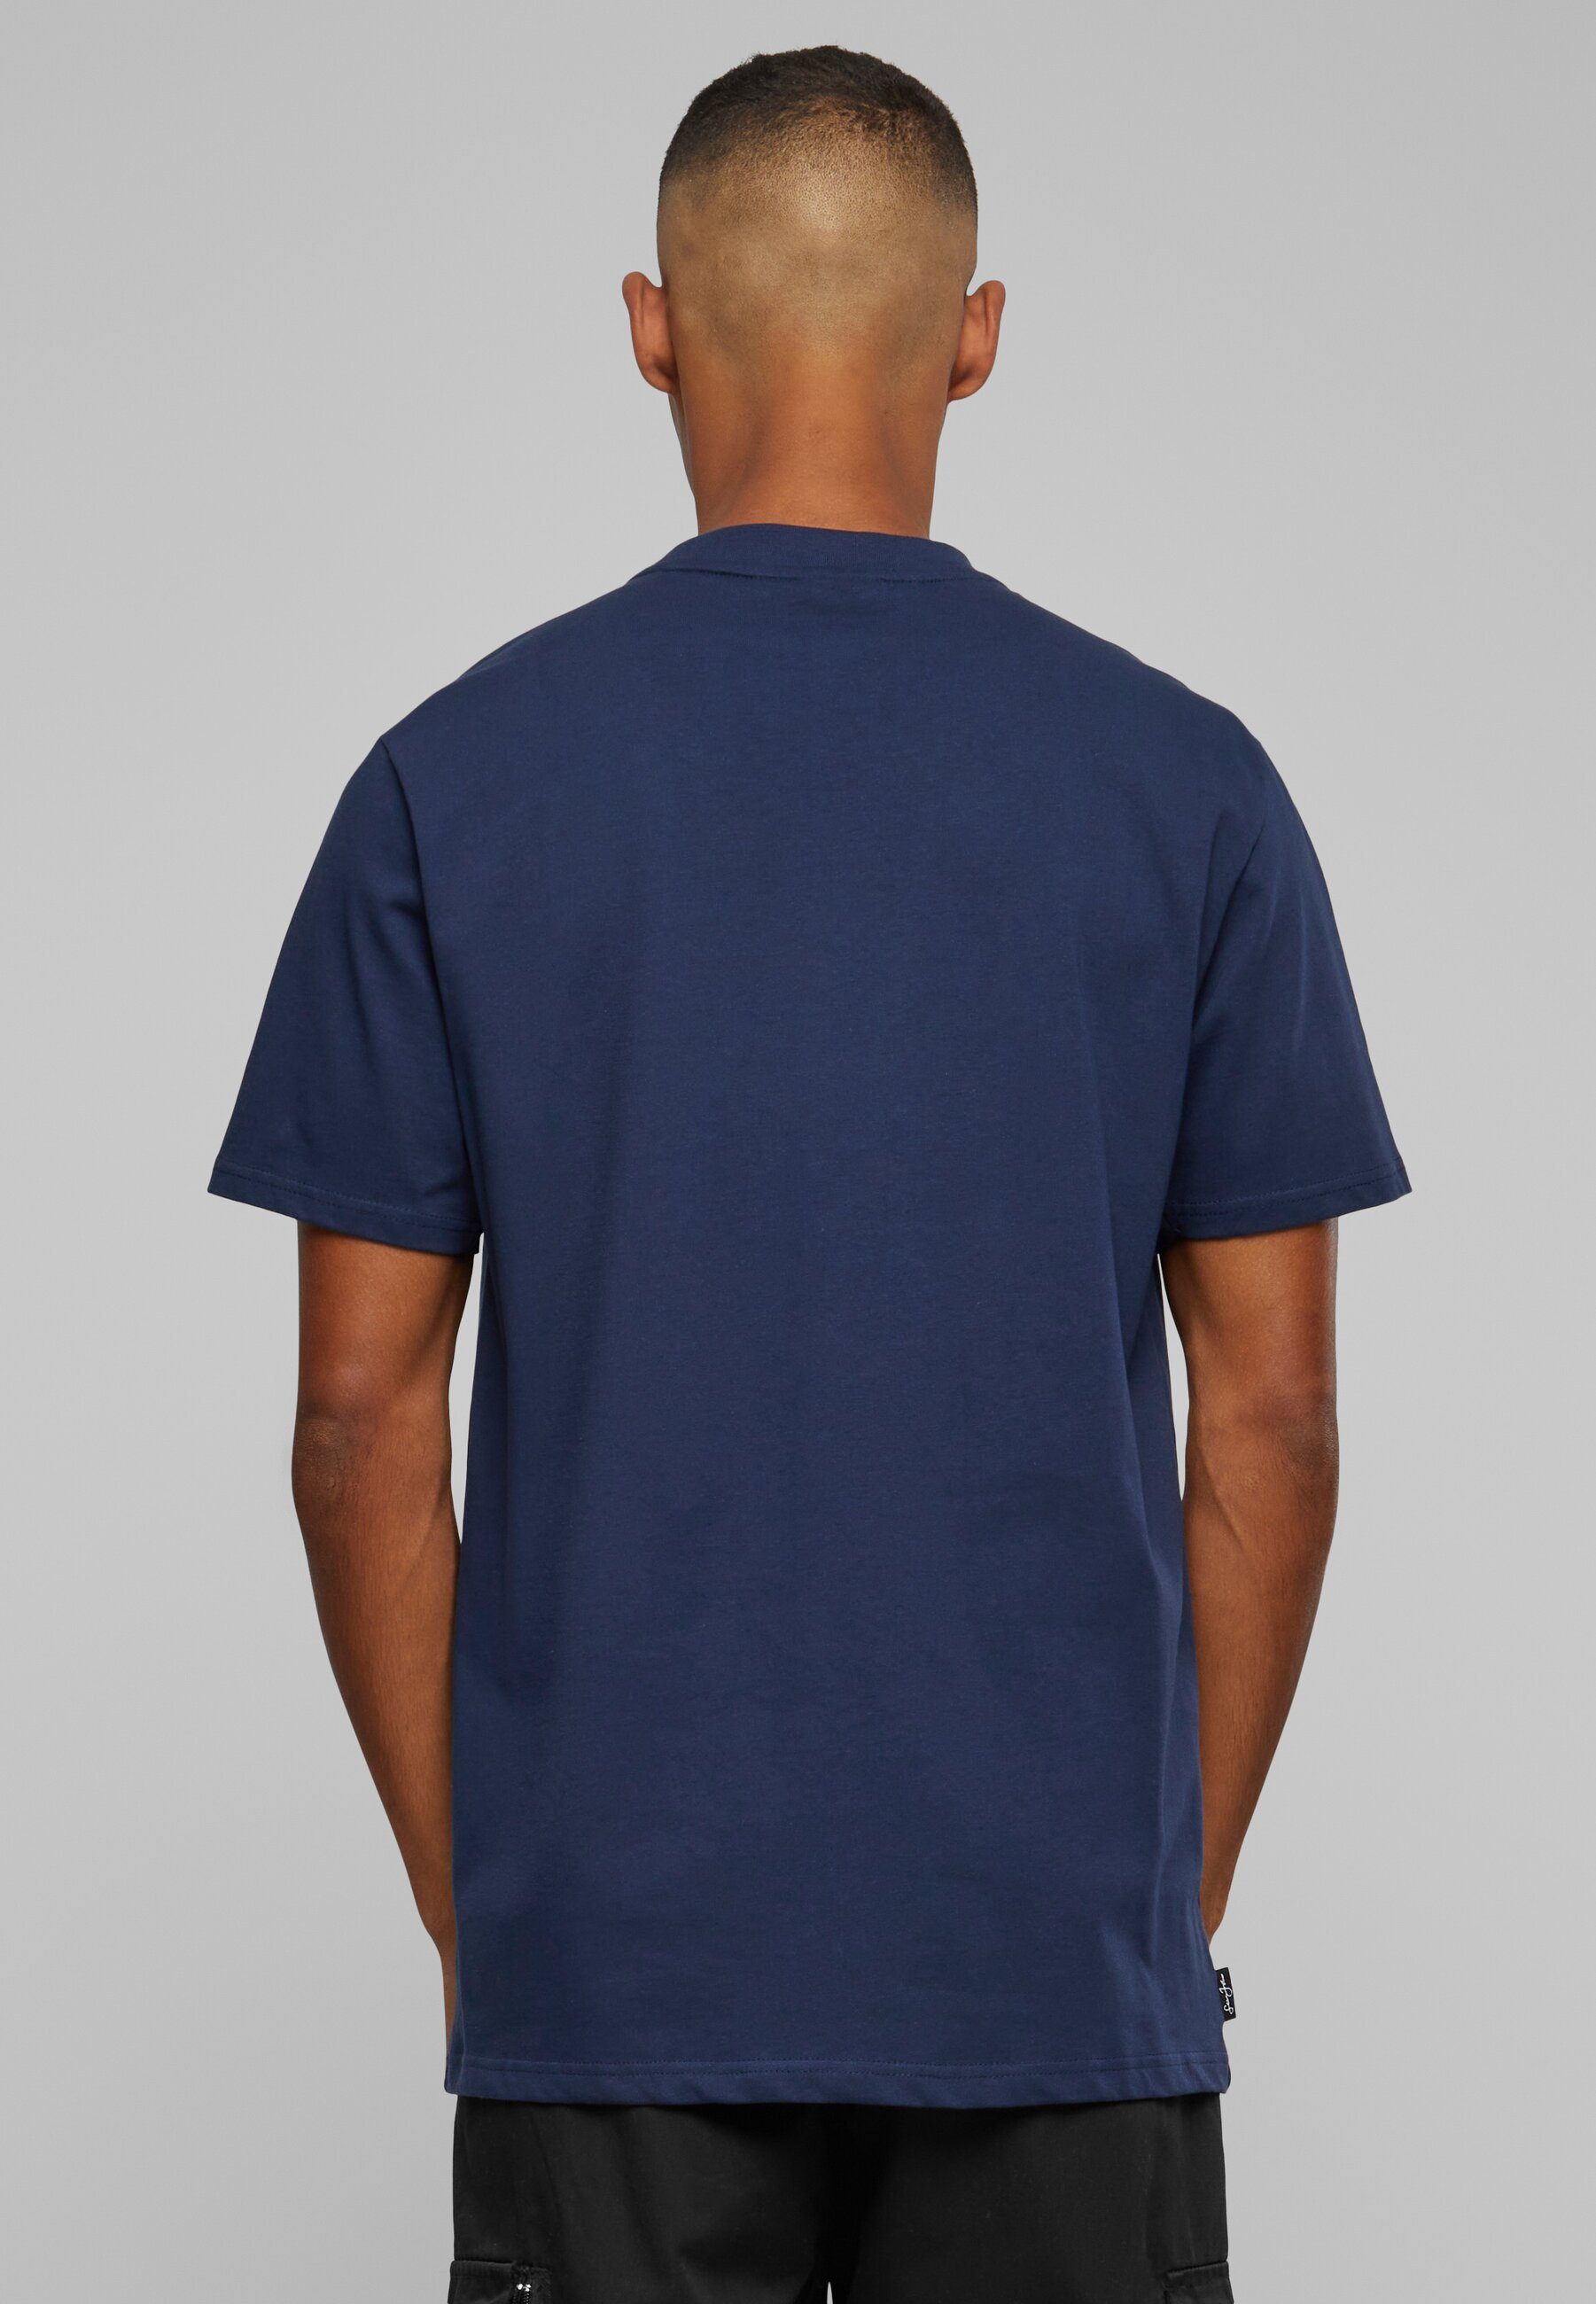 Sean John T-Shirt Classic Tee Herren blue Logo Essential (1-tlg) JM-TE012-092-007 dark